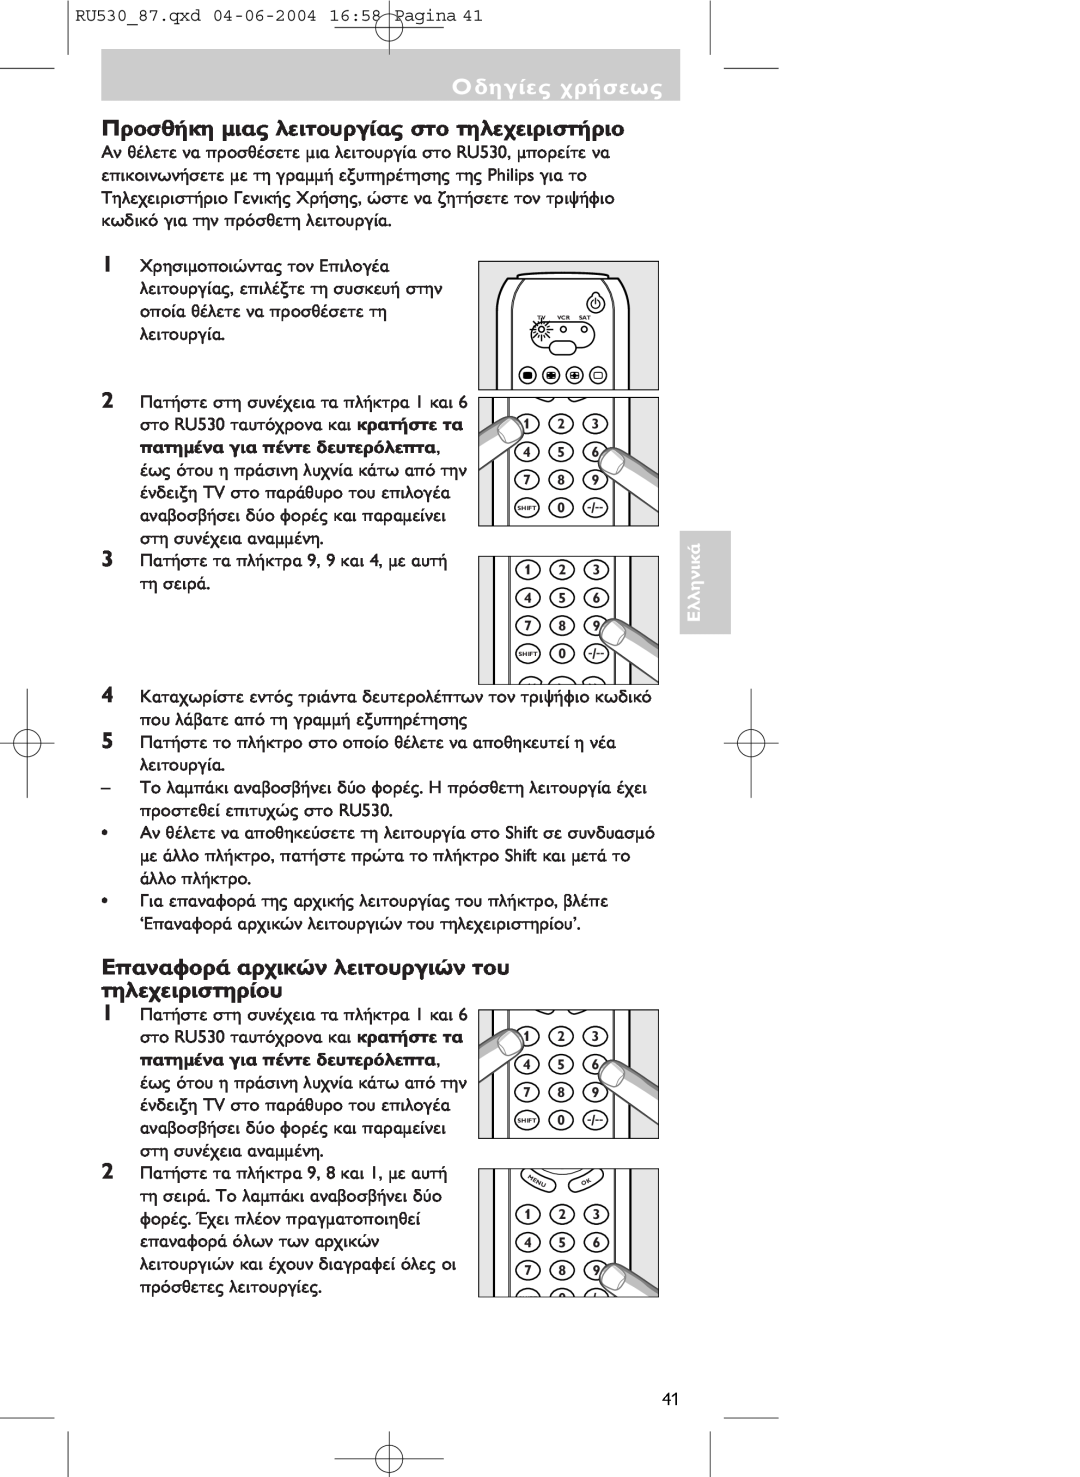 Philips SBC RU 530/87U manual RU530 87.qxd 04-06-200416 58 Pagina, RU530, Philips, Shift Shift 